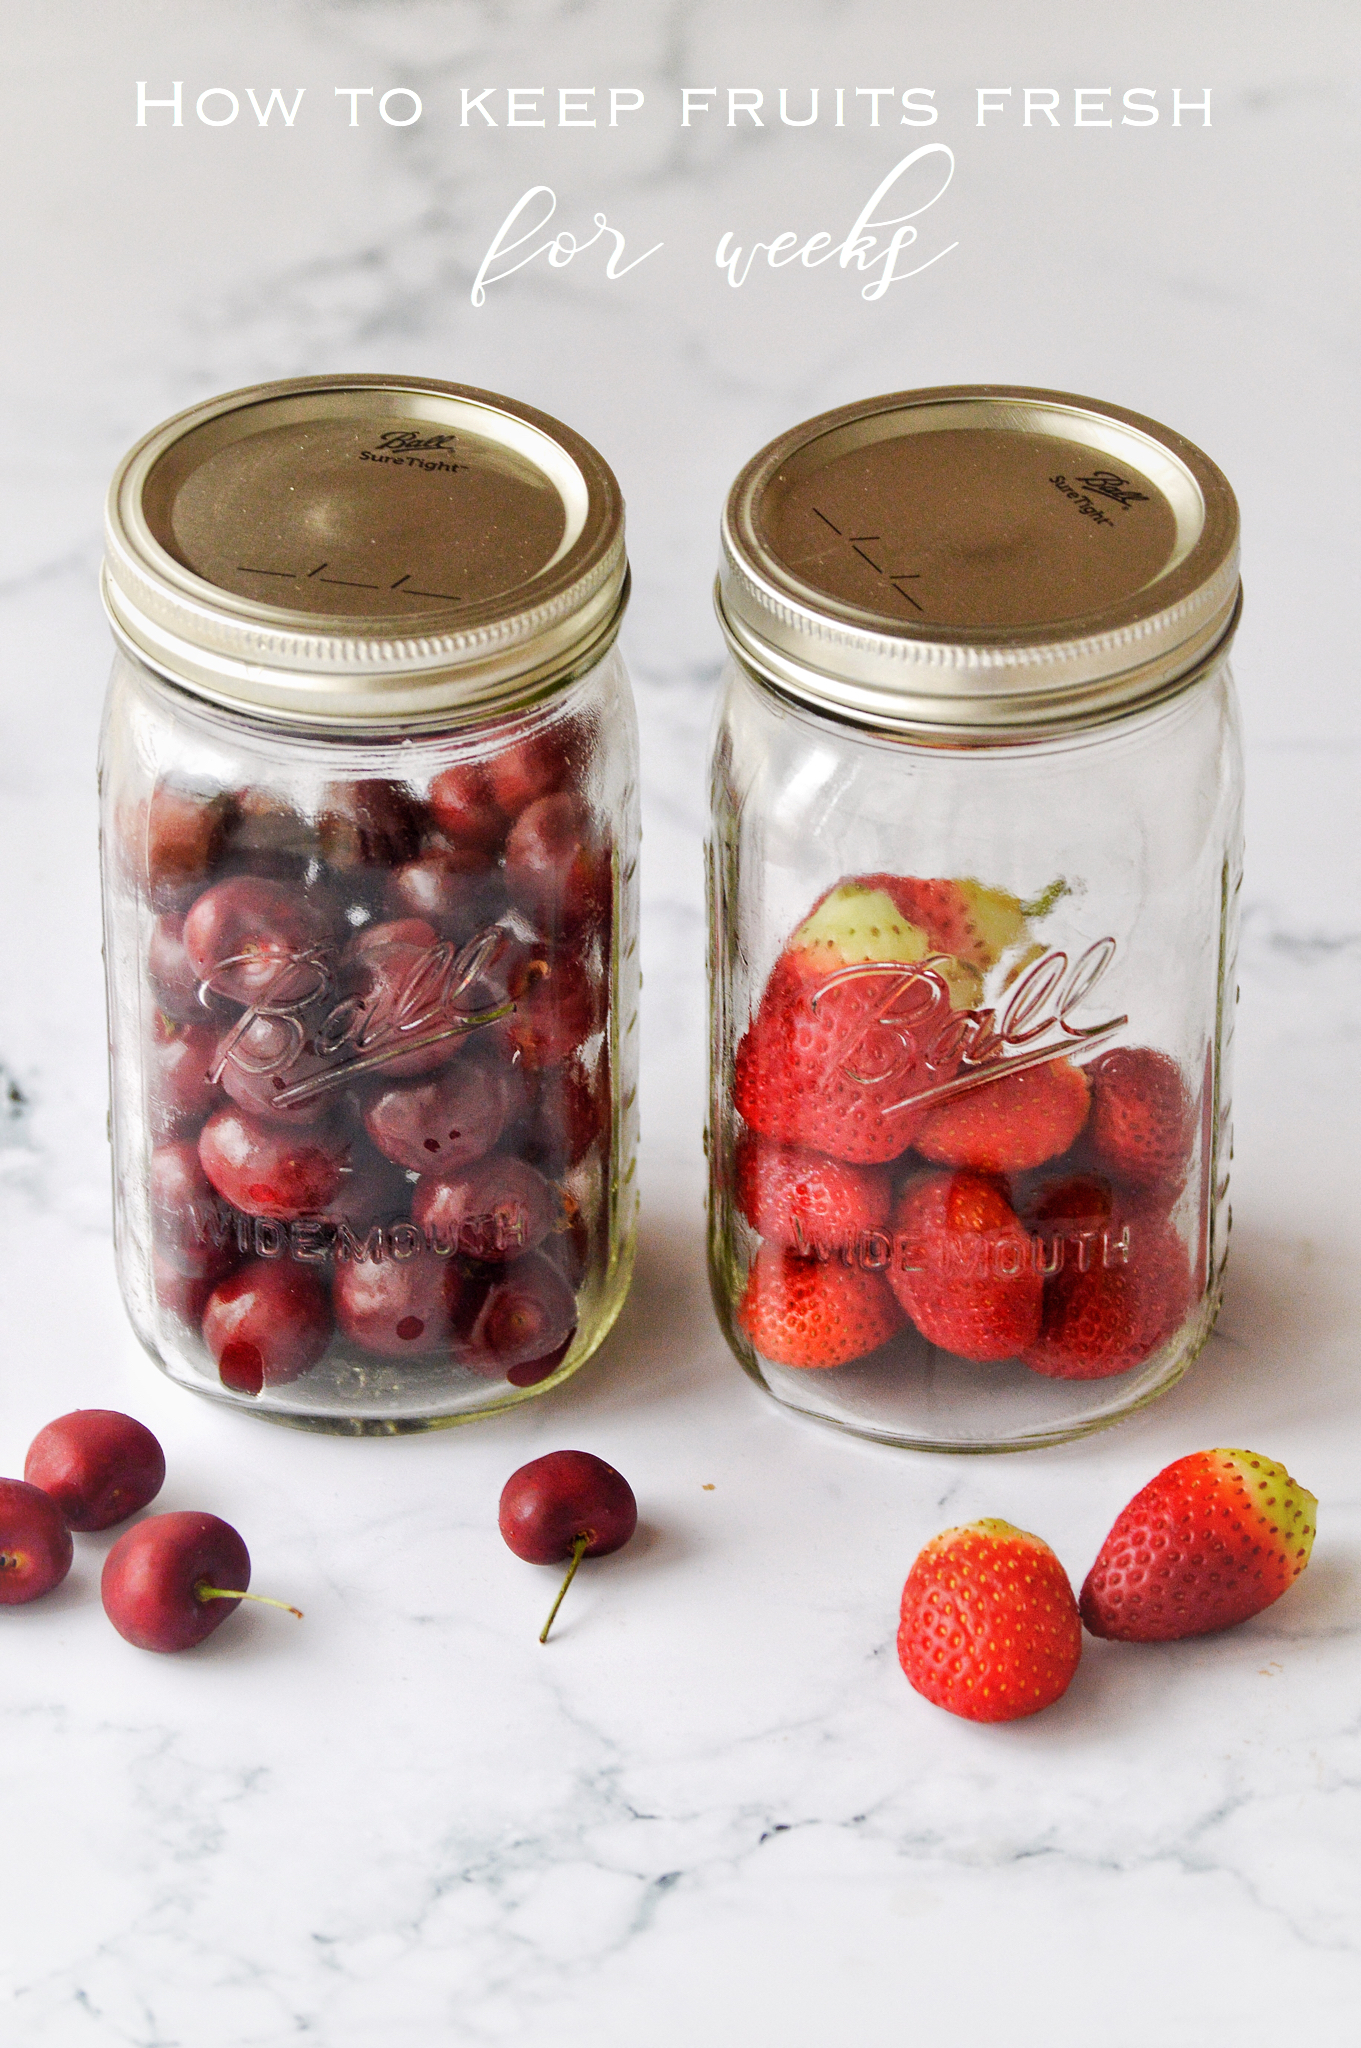 How to Make Your Fresh Berries Last Longer